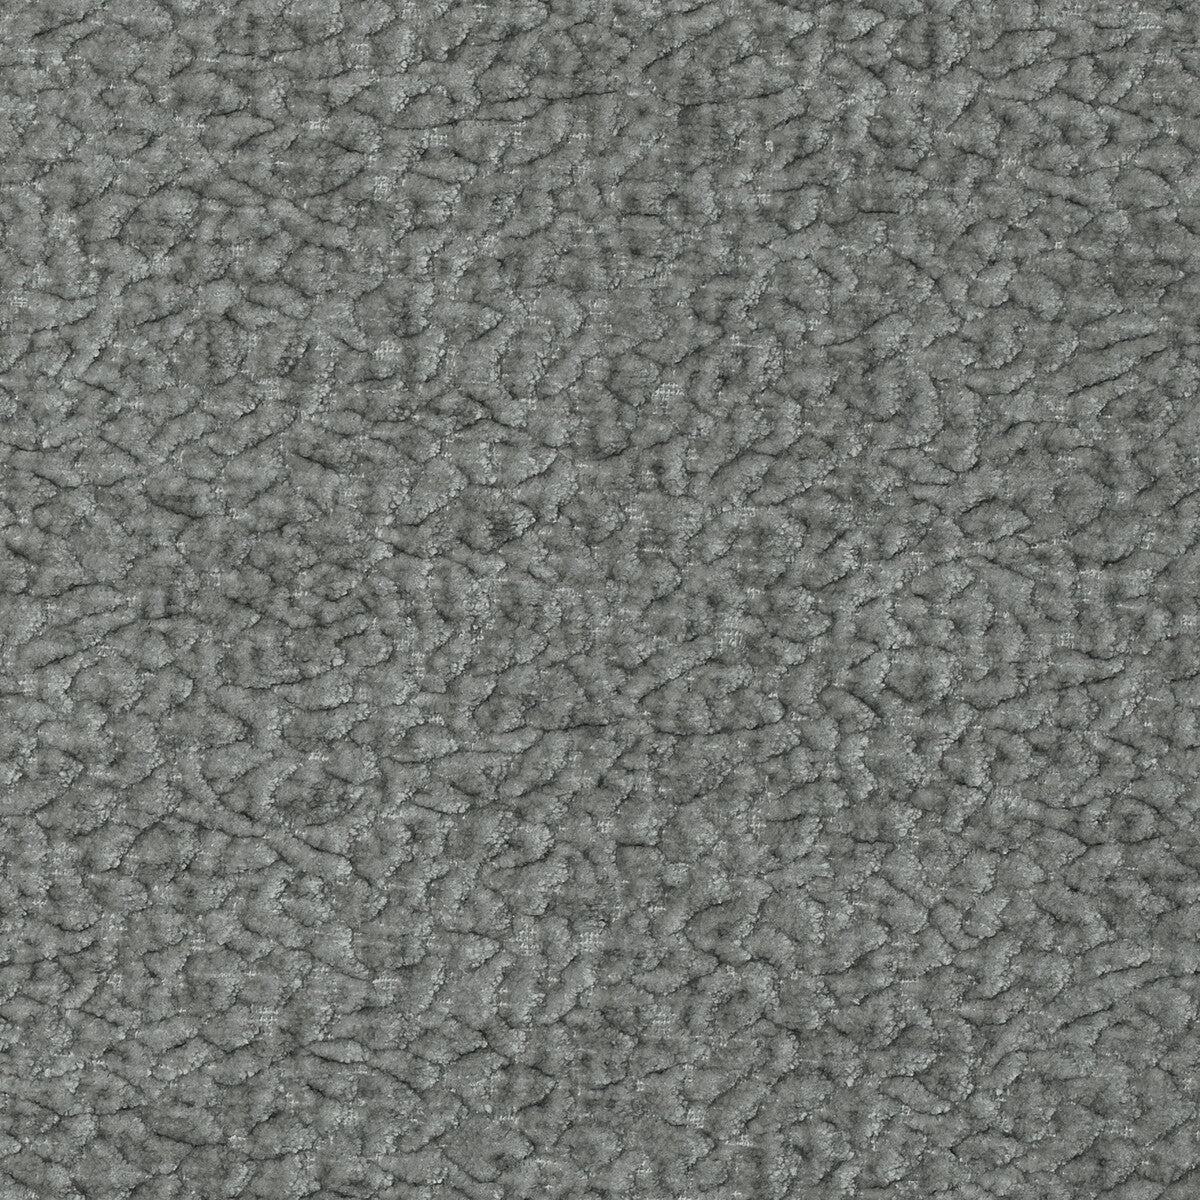 Barton Chenille fabric in dusk color - pattern 36074.11.0 - by Kravet Smart